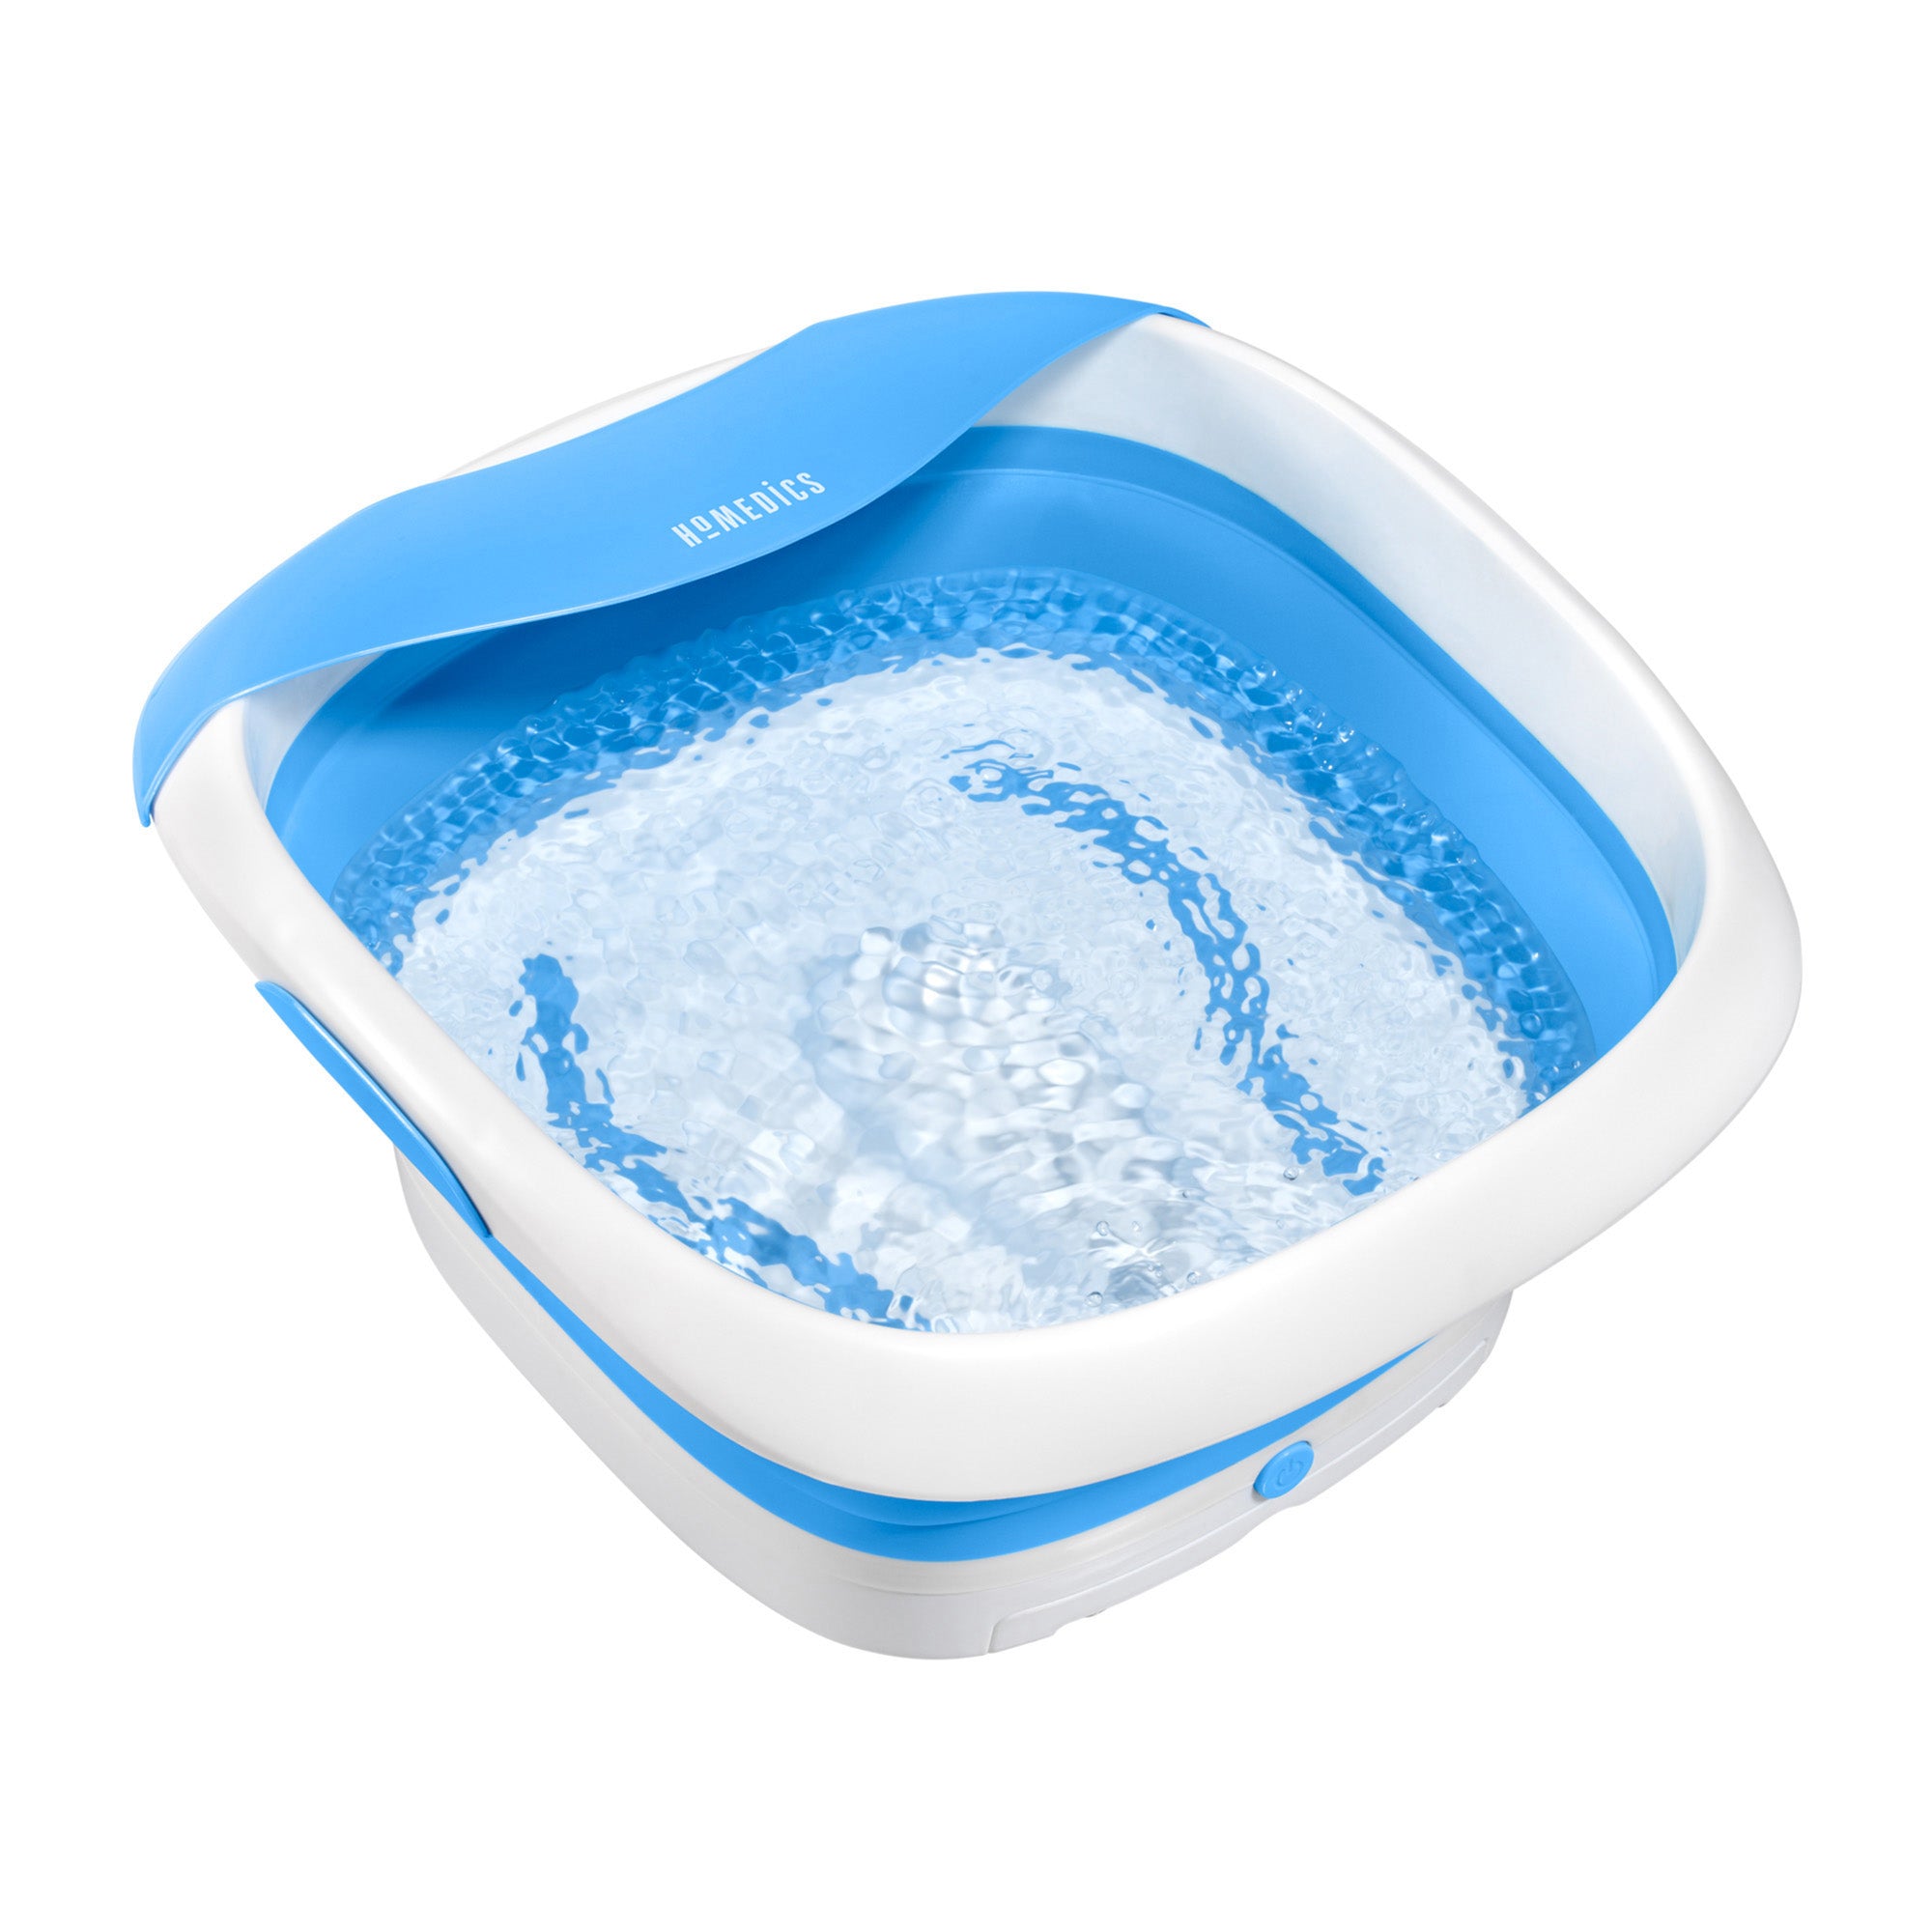 HoMedics Collapsible Footbath with Vibration, Heat Maintenance & Salt Cap. - 15-08373